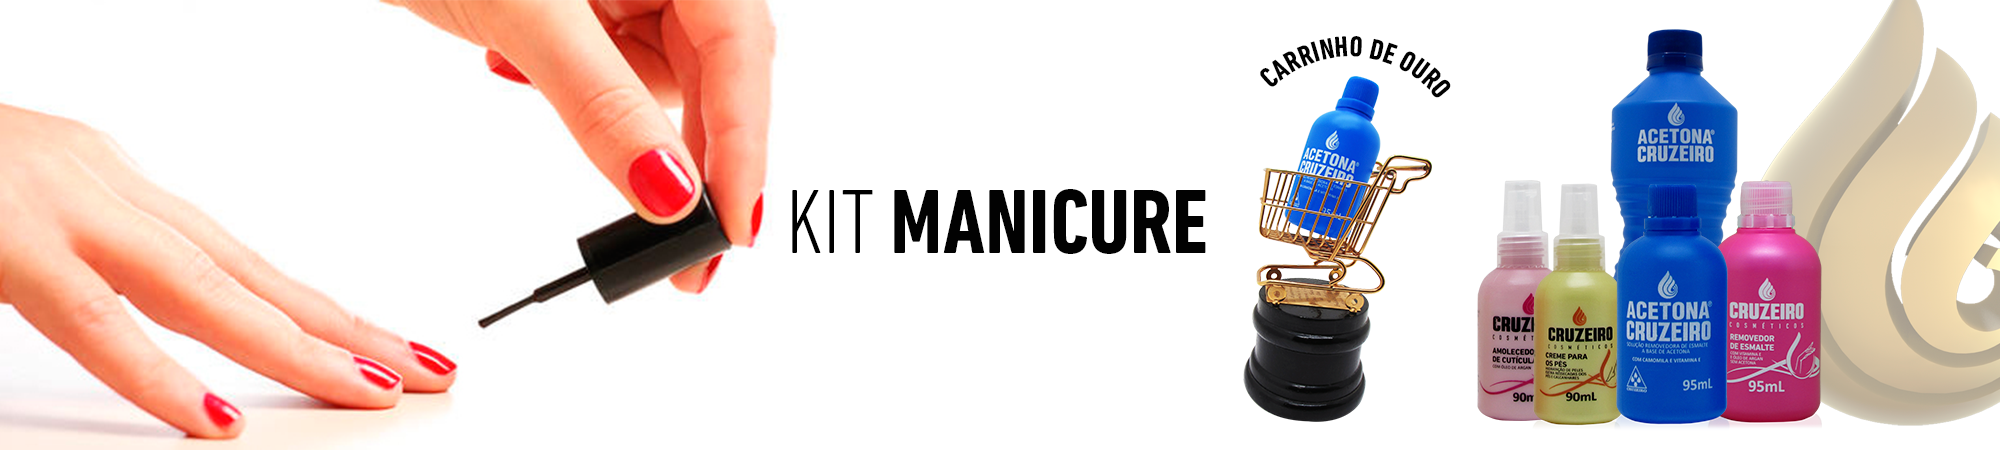 kit-manicure